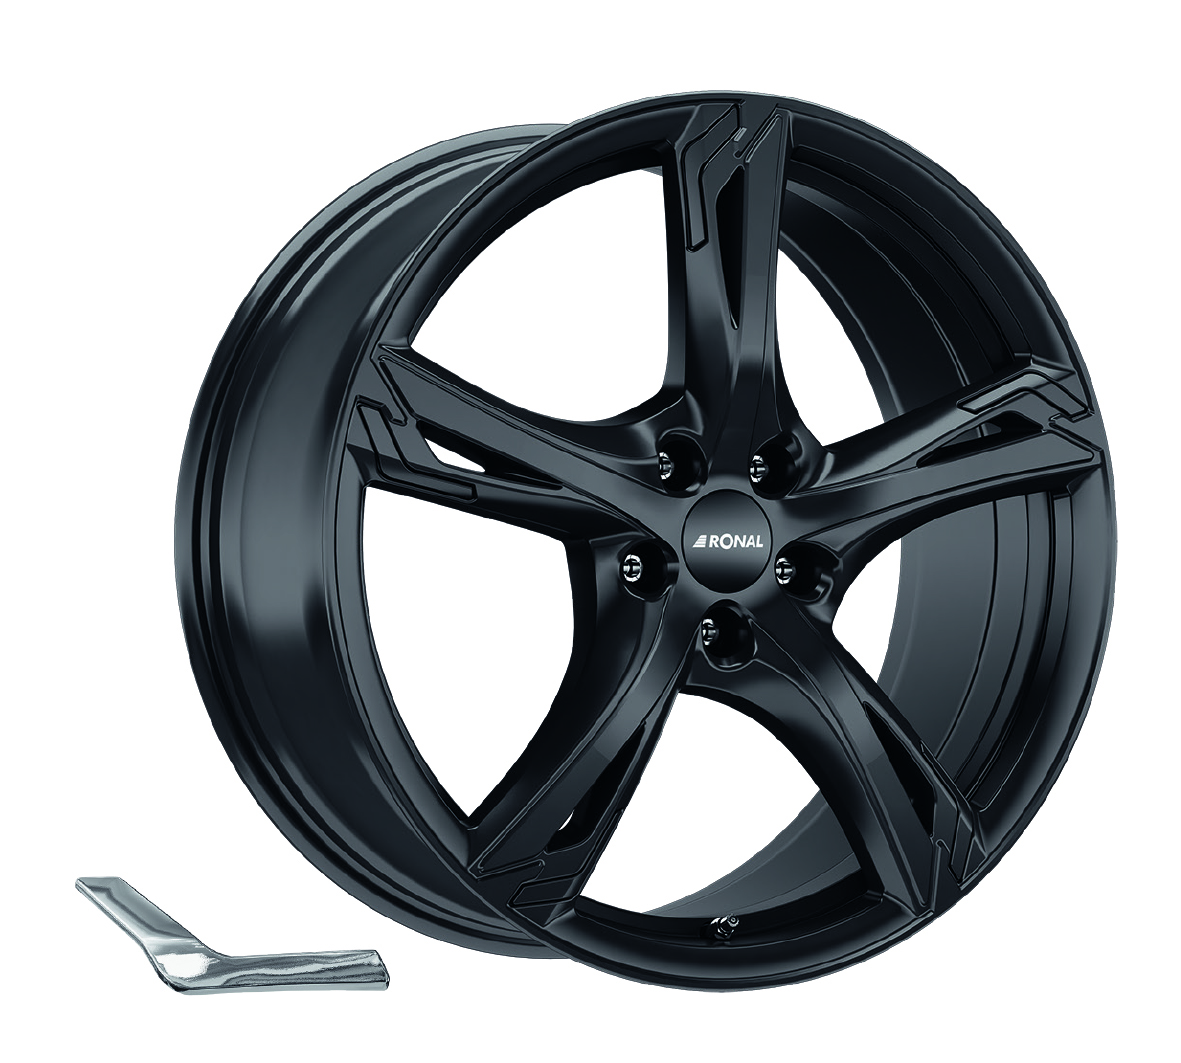 Ronal R62 wheel now offers “Infinite Chrome”